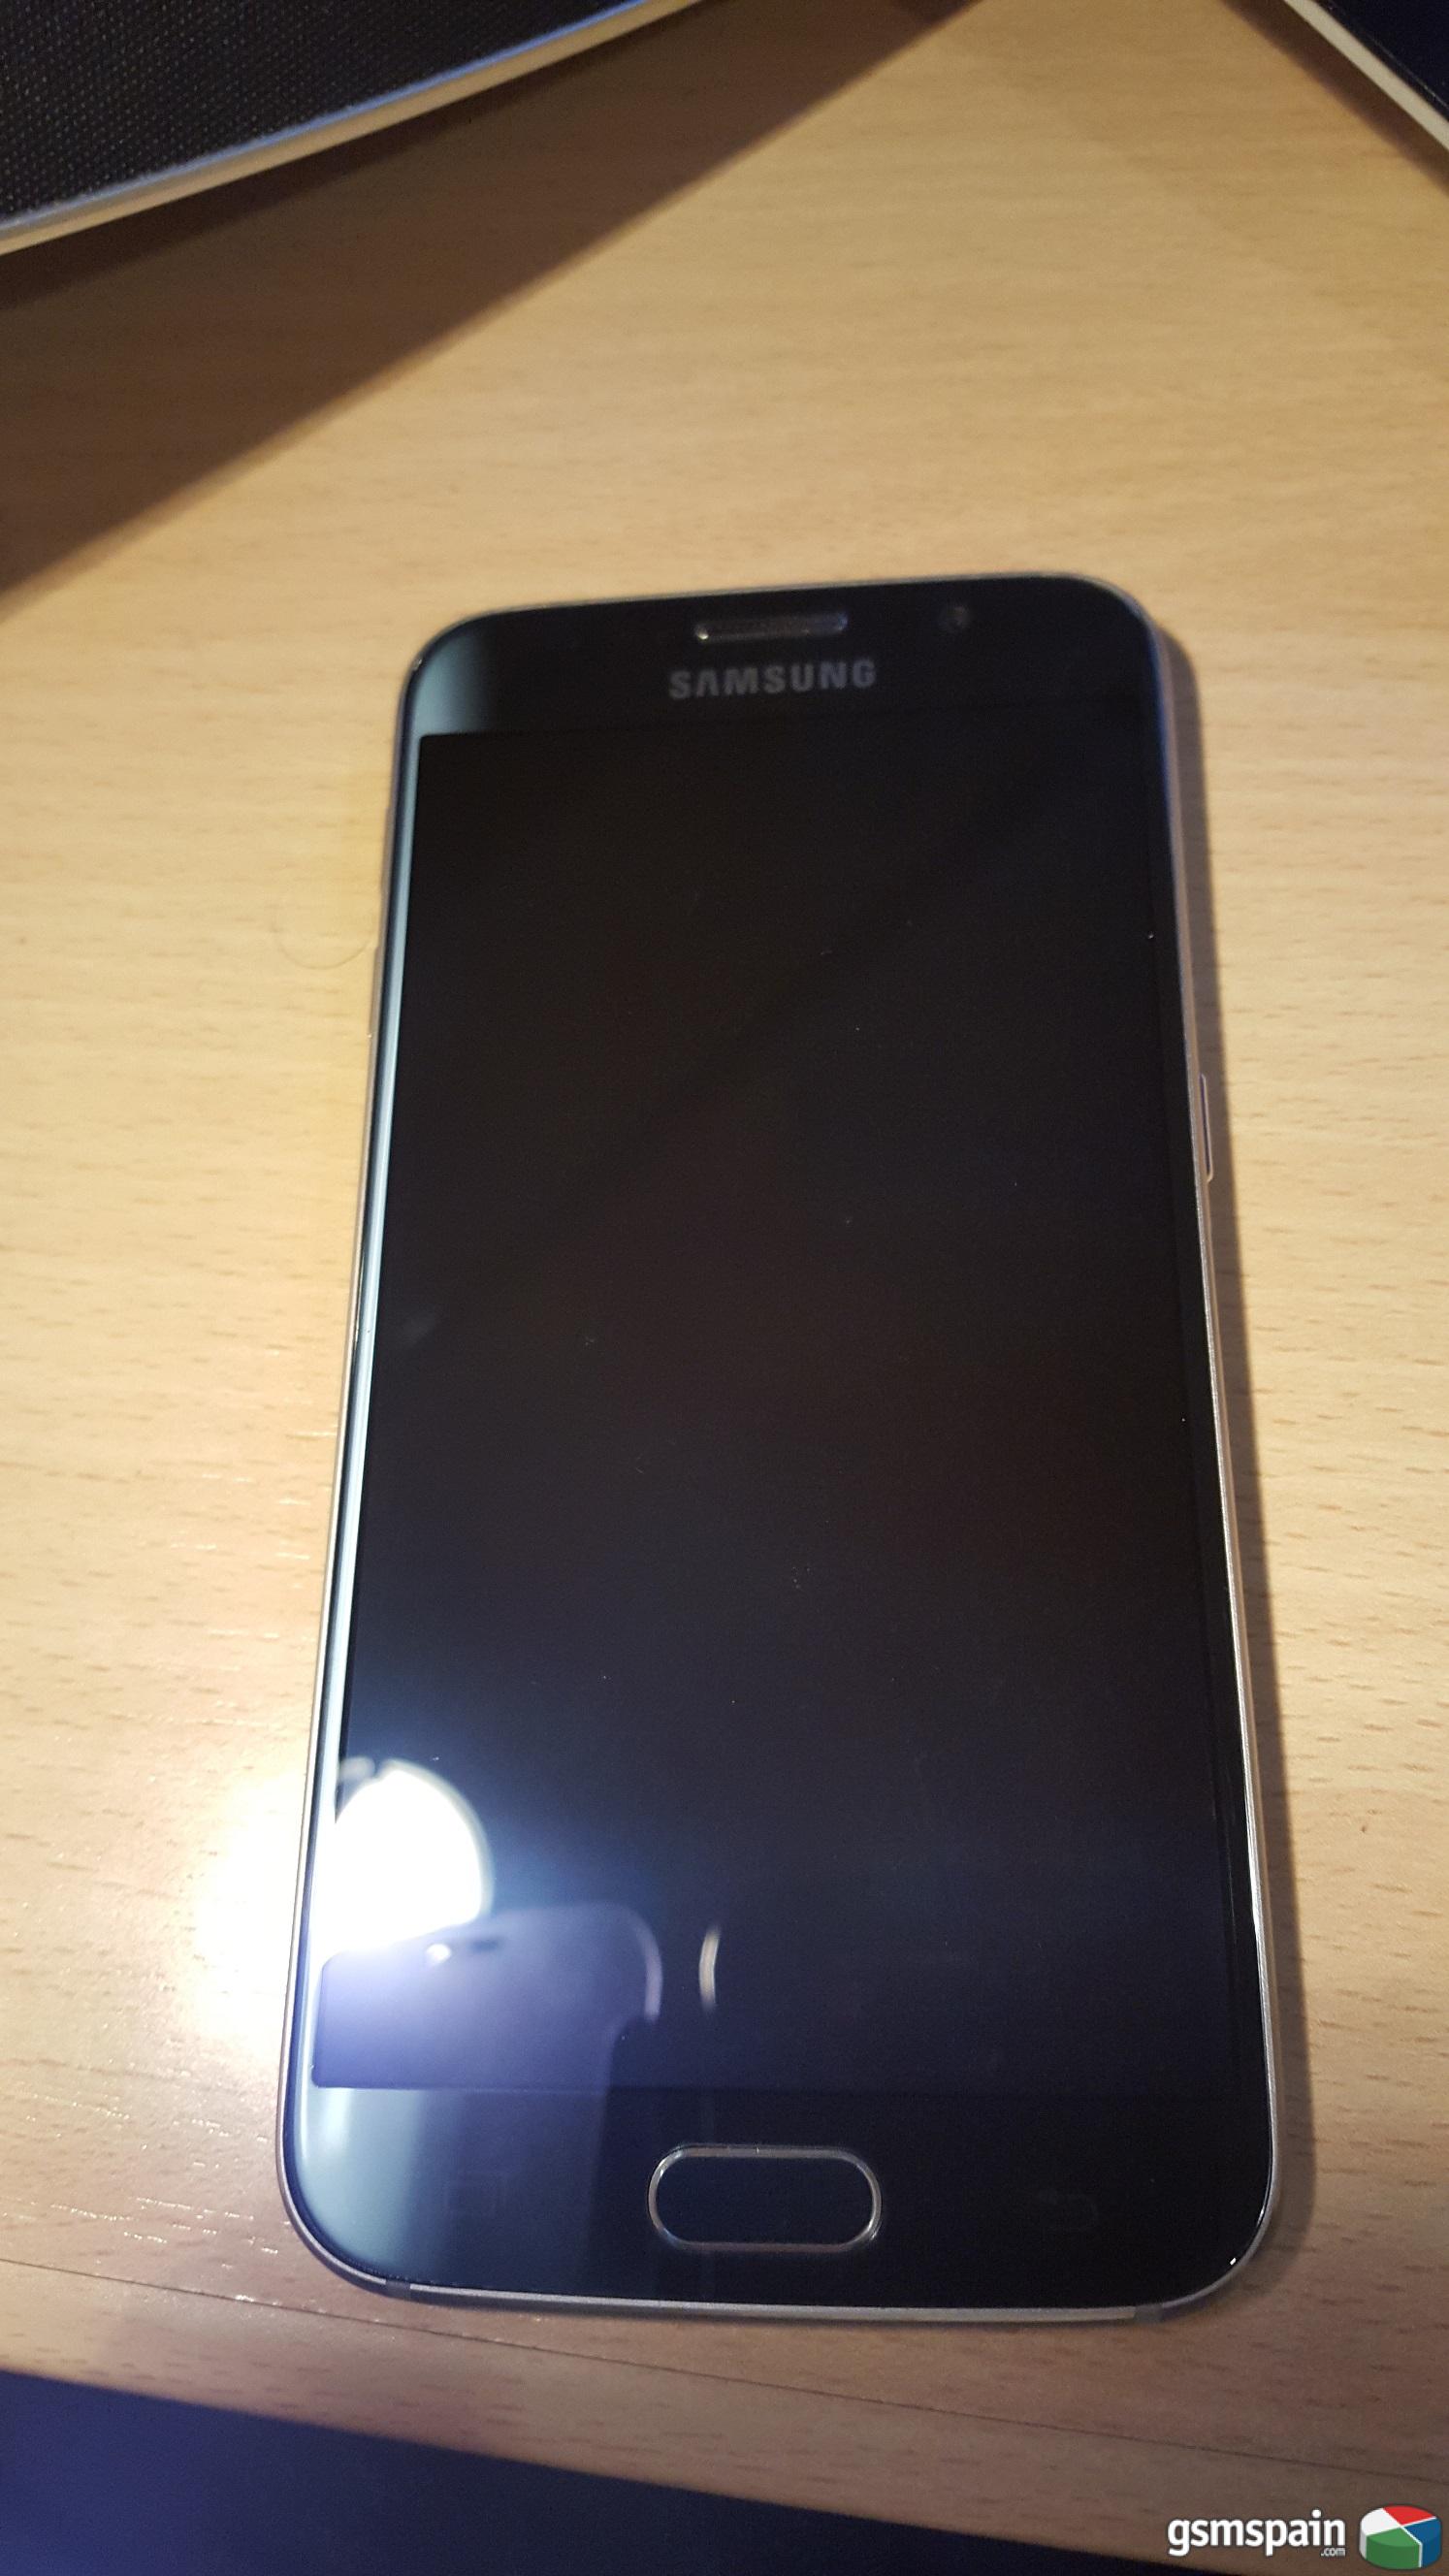 [VENDO] Samsung Galaxy S6 Black Shappire 32 Gb Libre de origen nuevo con S View Cover